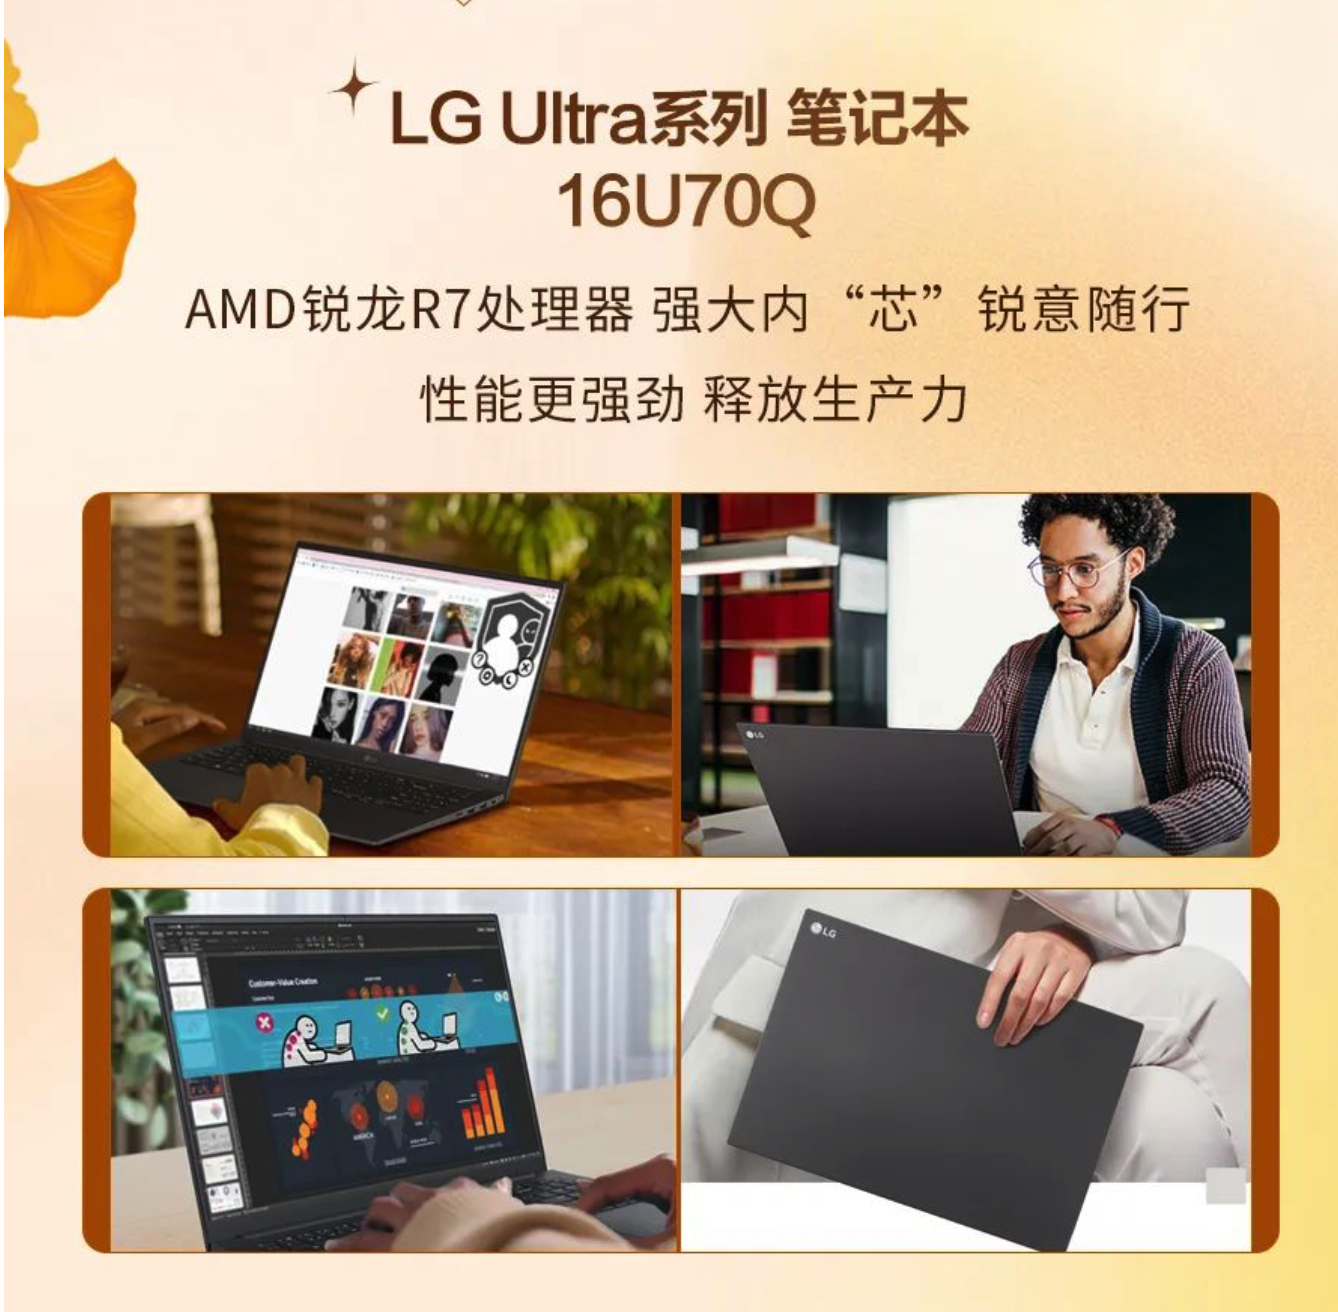 LG Ultra係列產品筆記本電腦行貨將要掛牌上市，配備AMD R7CPU